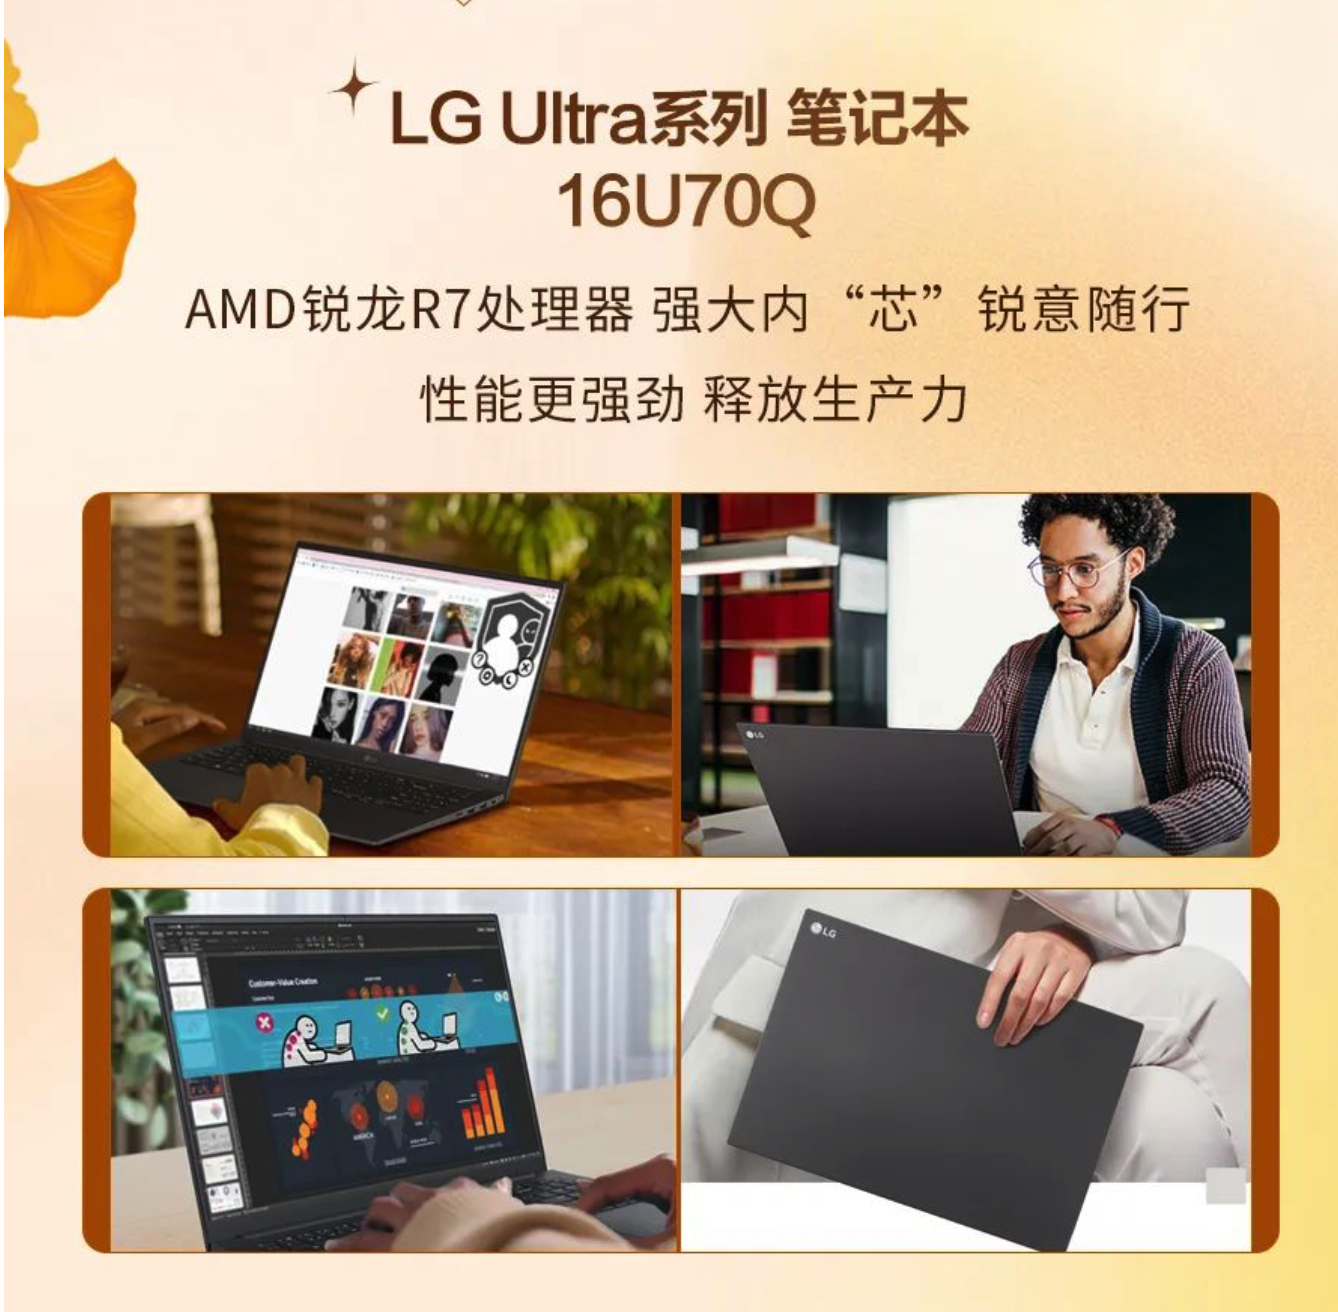 LG Ultra係列產品筆記本電腦行貨將要掛牌上市，配備AMD R7CPU